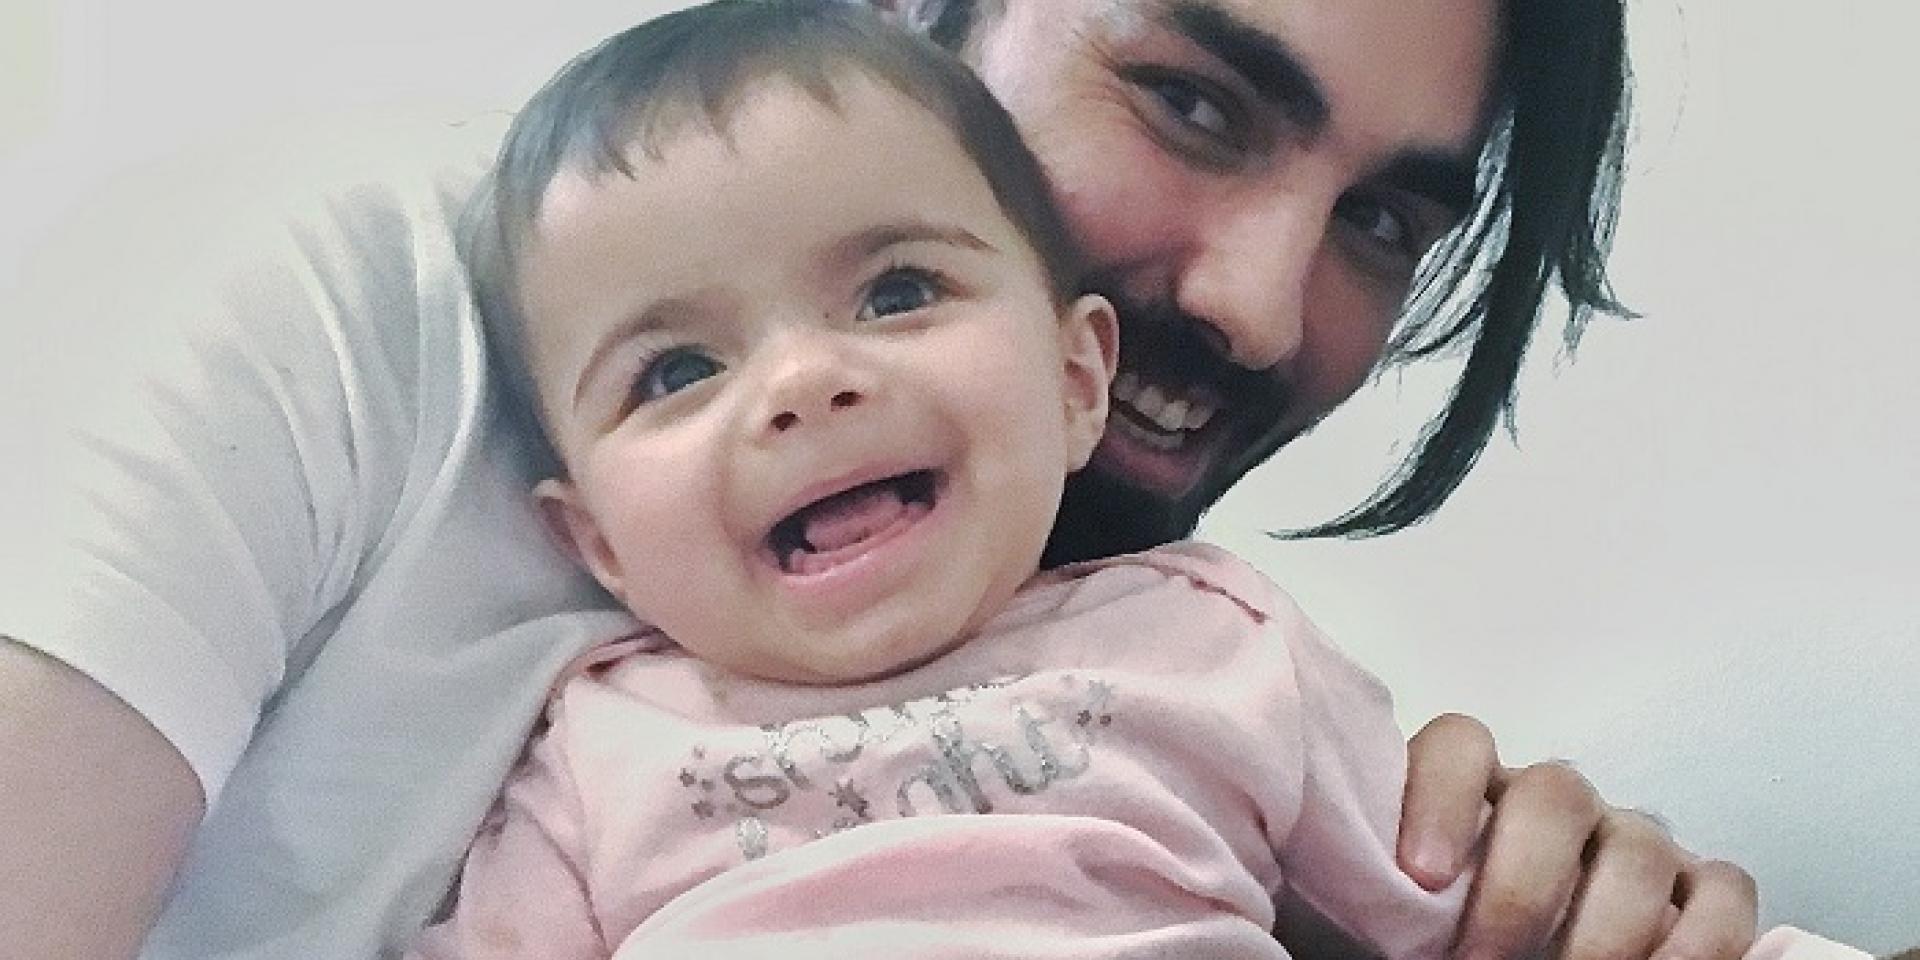 A man holding a baby, both facing the camera